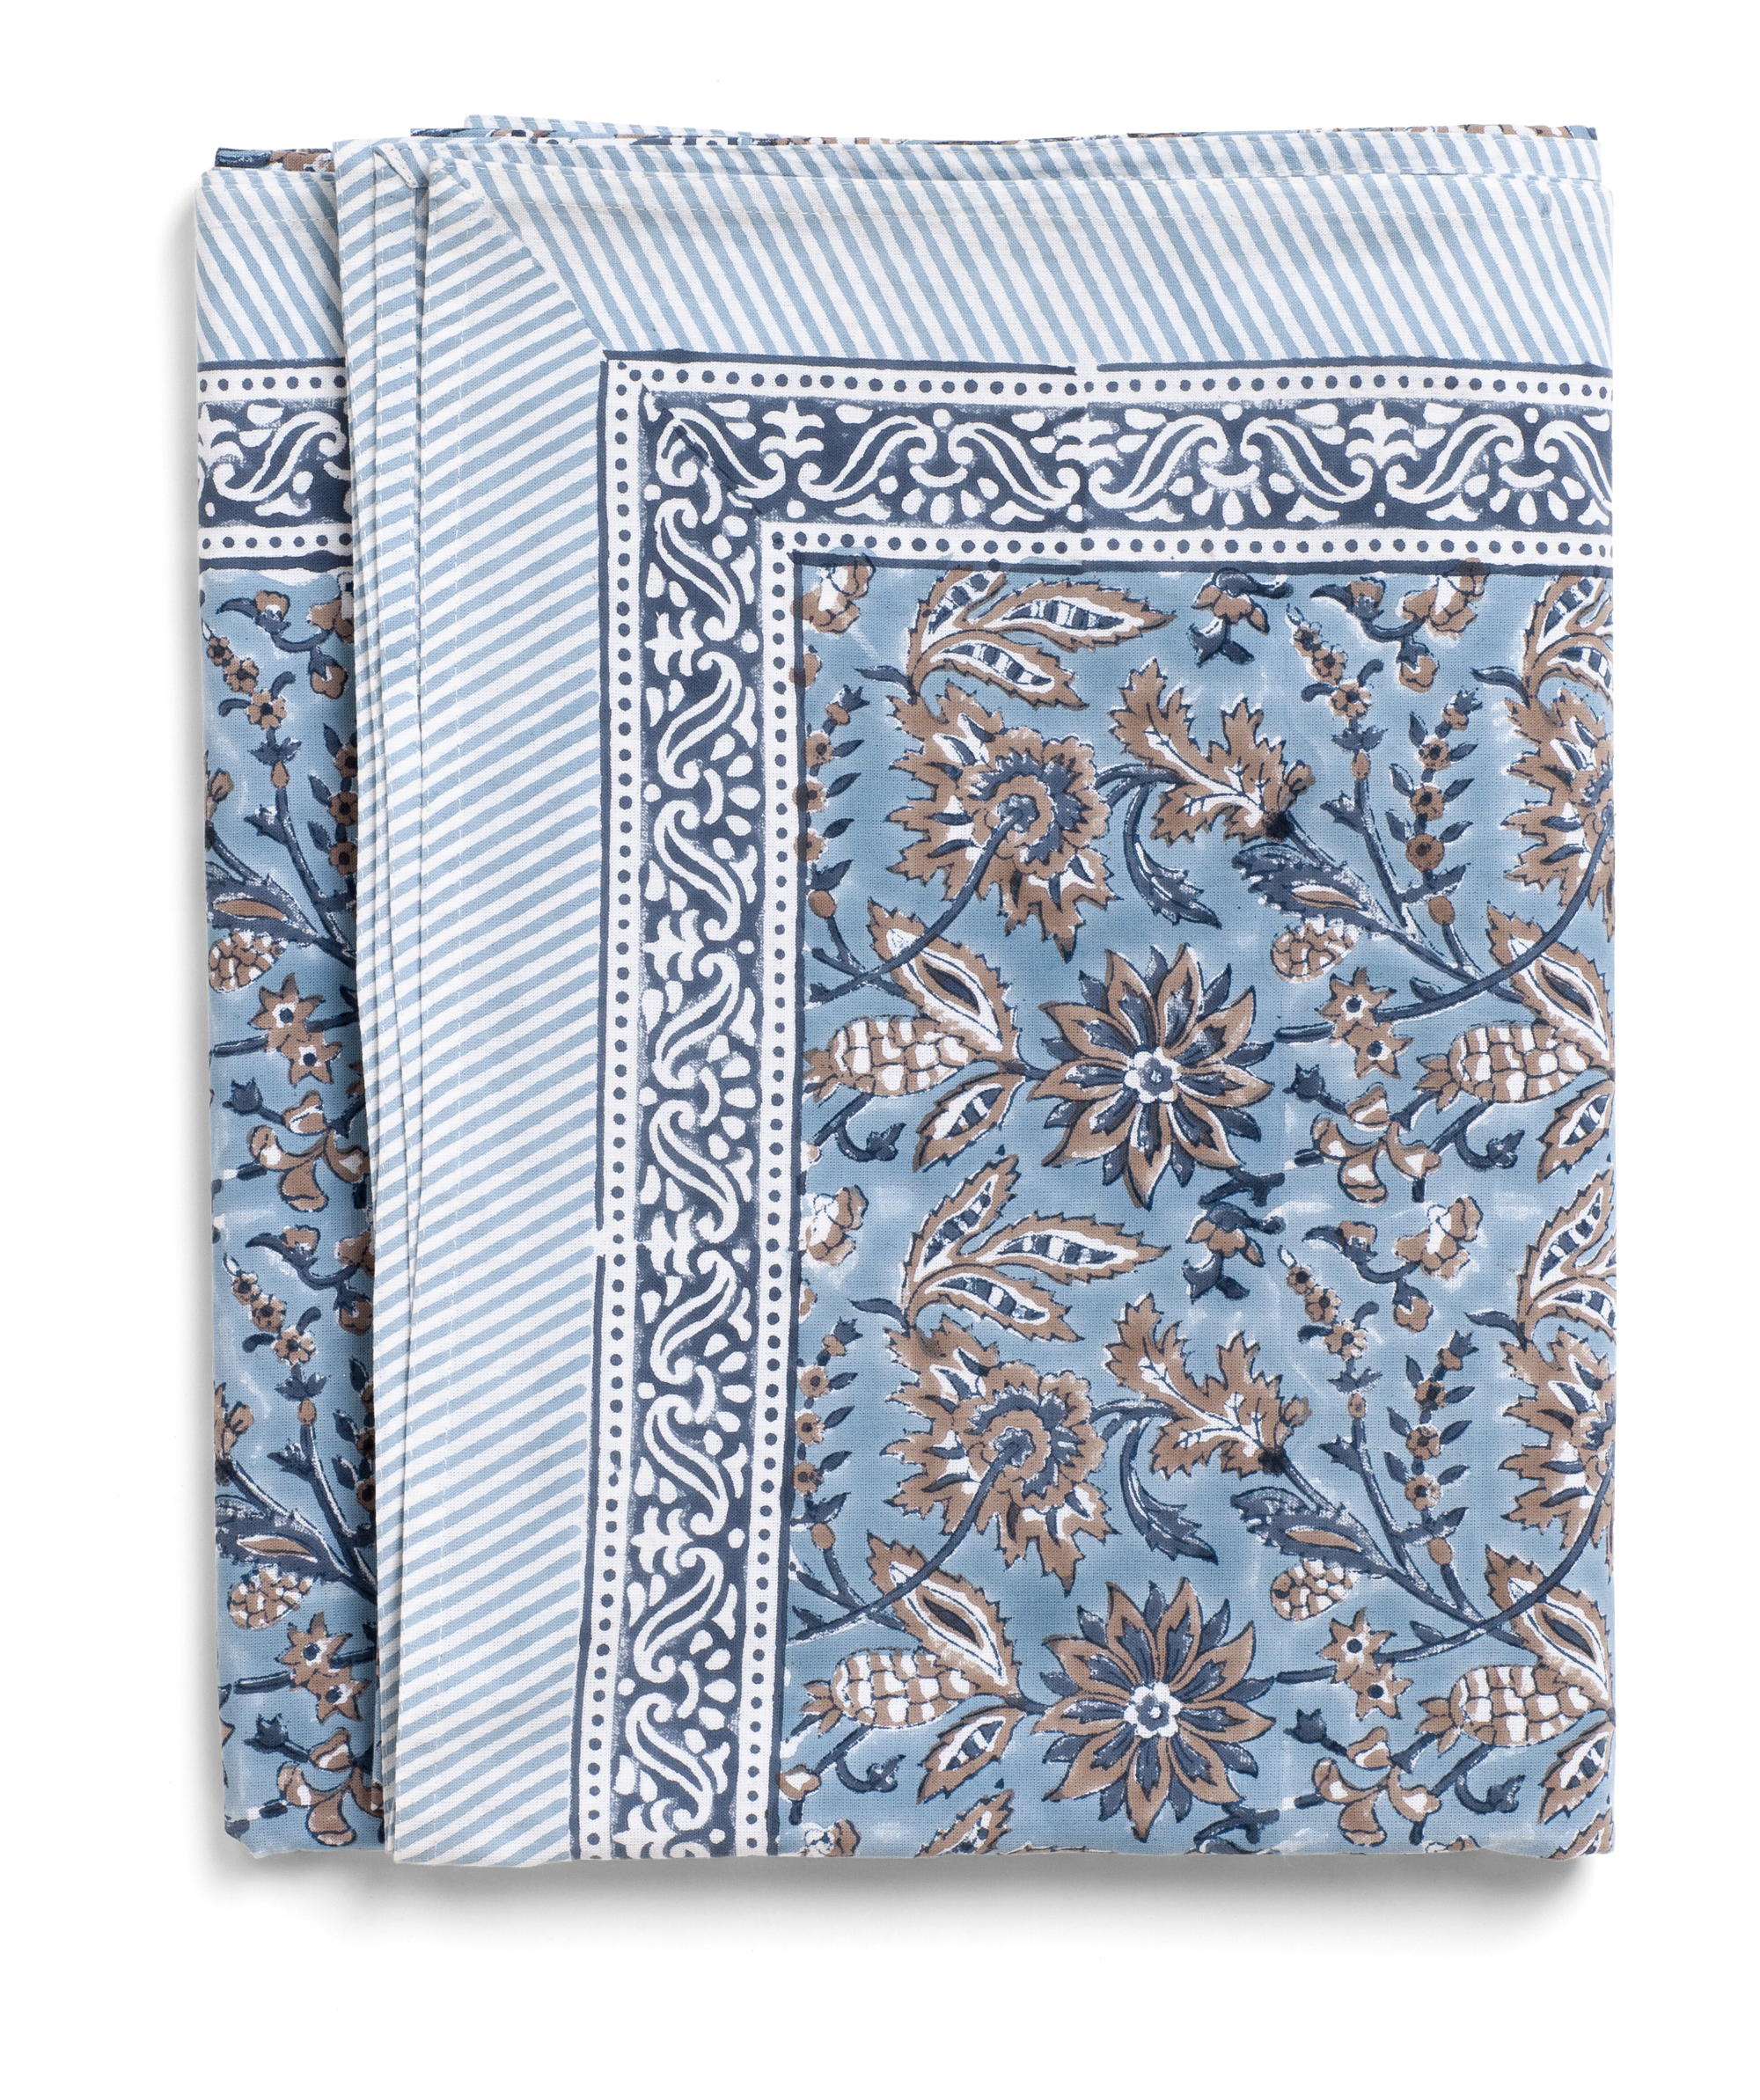 Cotton Tablecloth Indian Summer Design - Blue